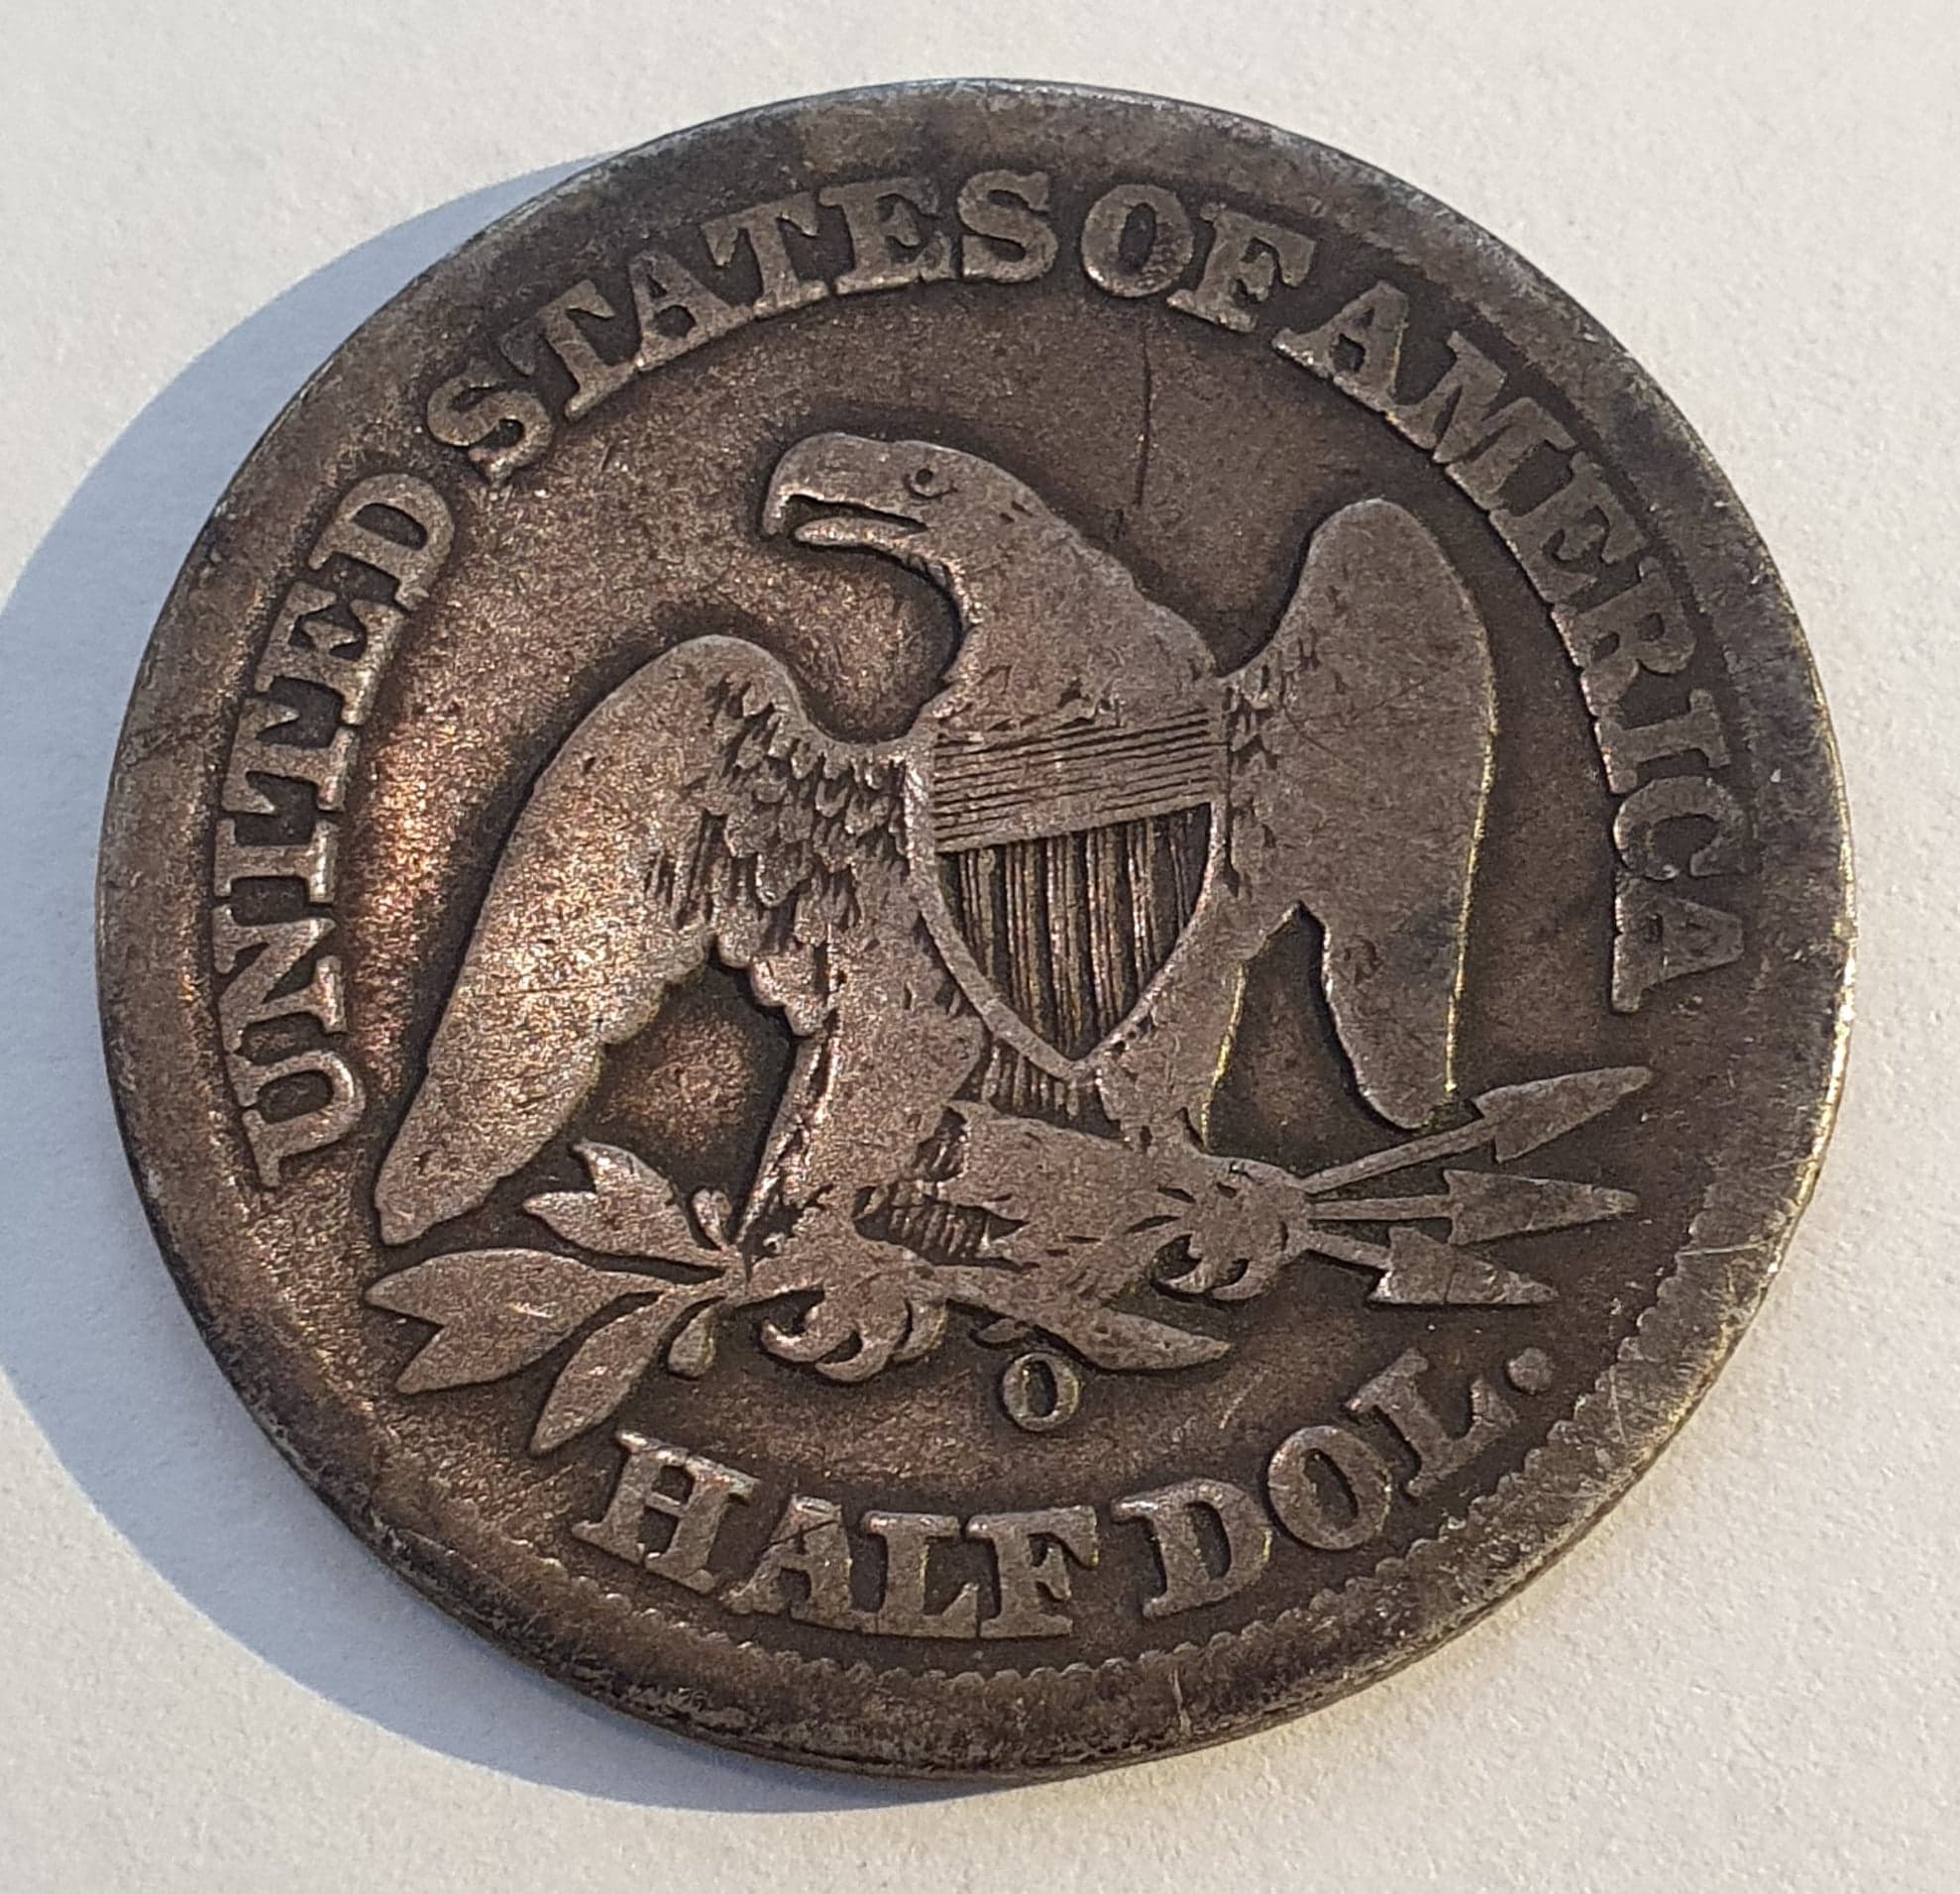 1/2 Silver dollar, 1858